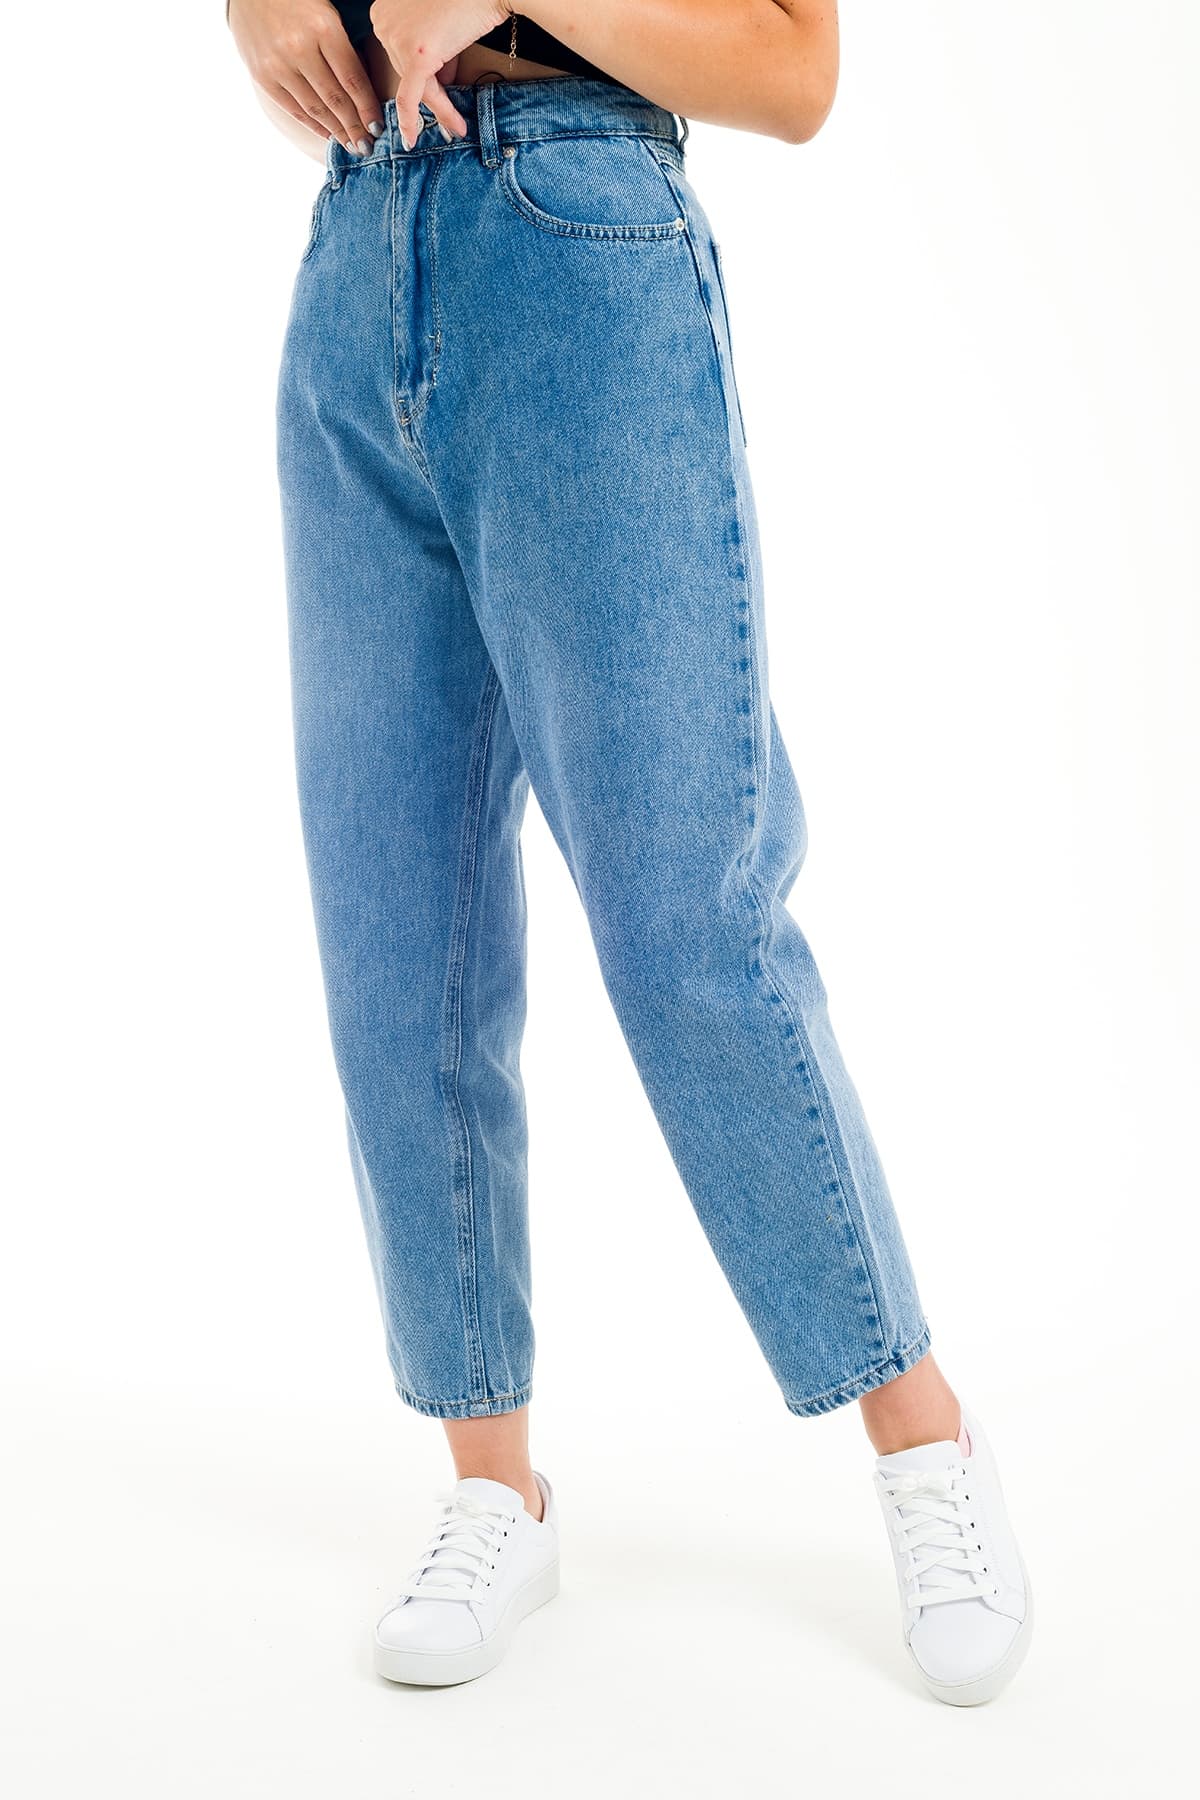 ZDN 9153 Ortadan Dikişli Mom Jeans Model Kadın Kot Pantolon